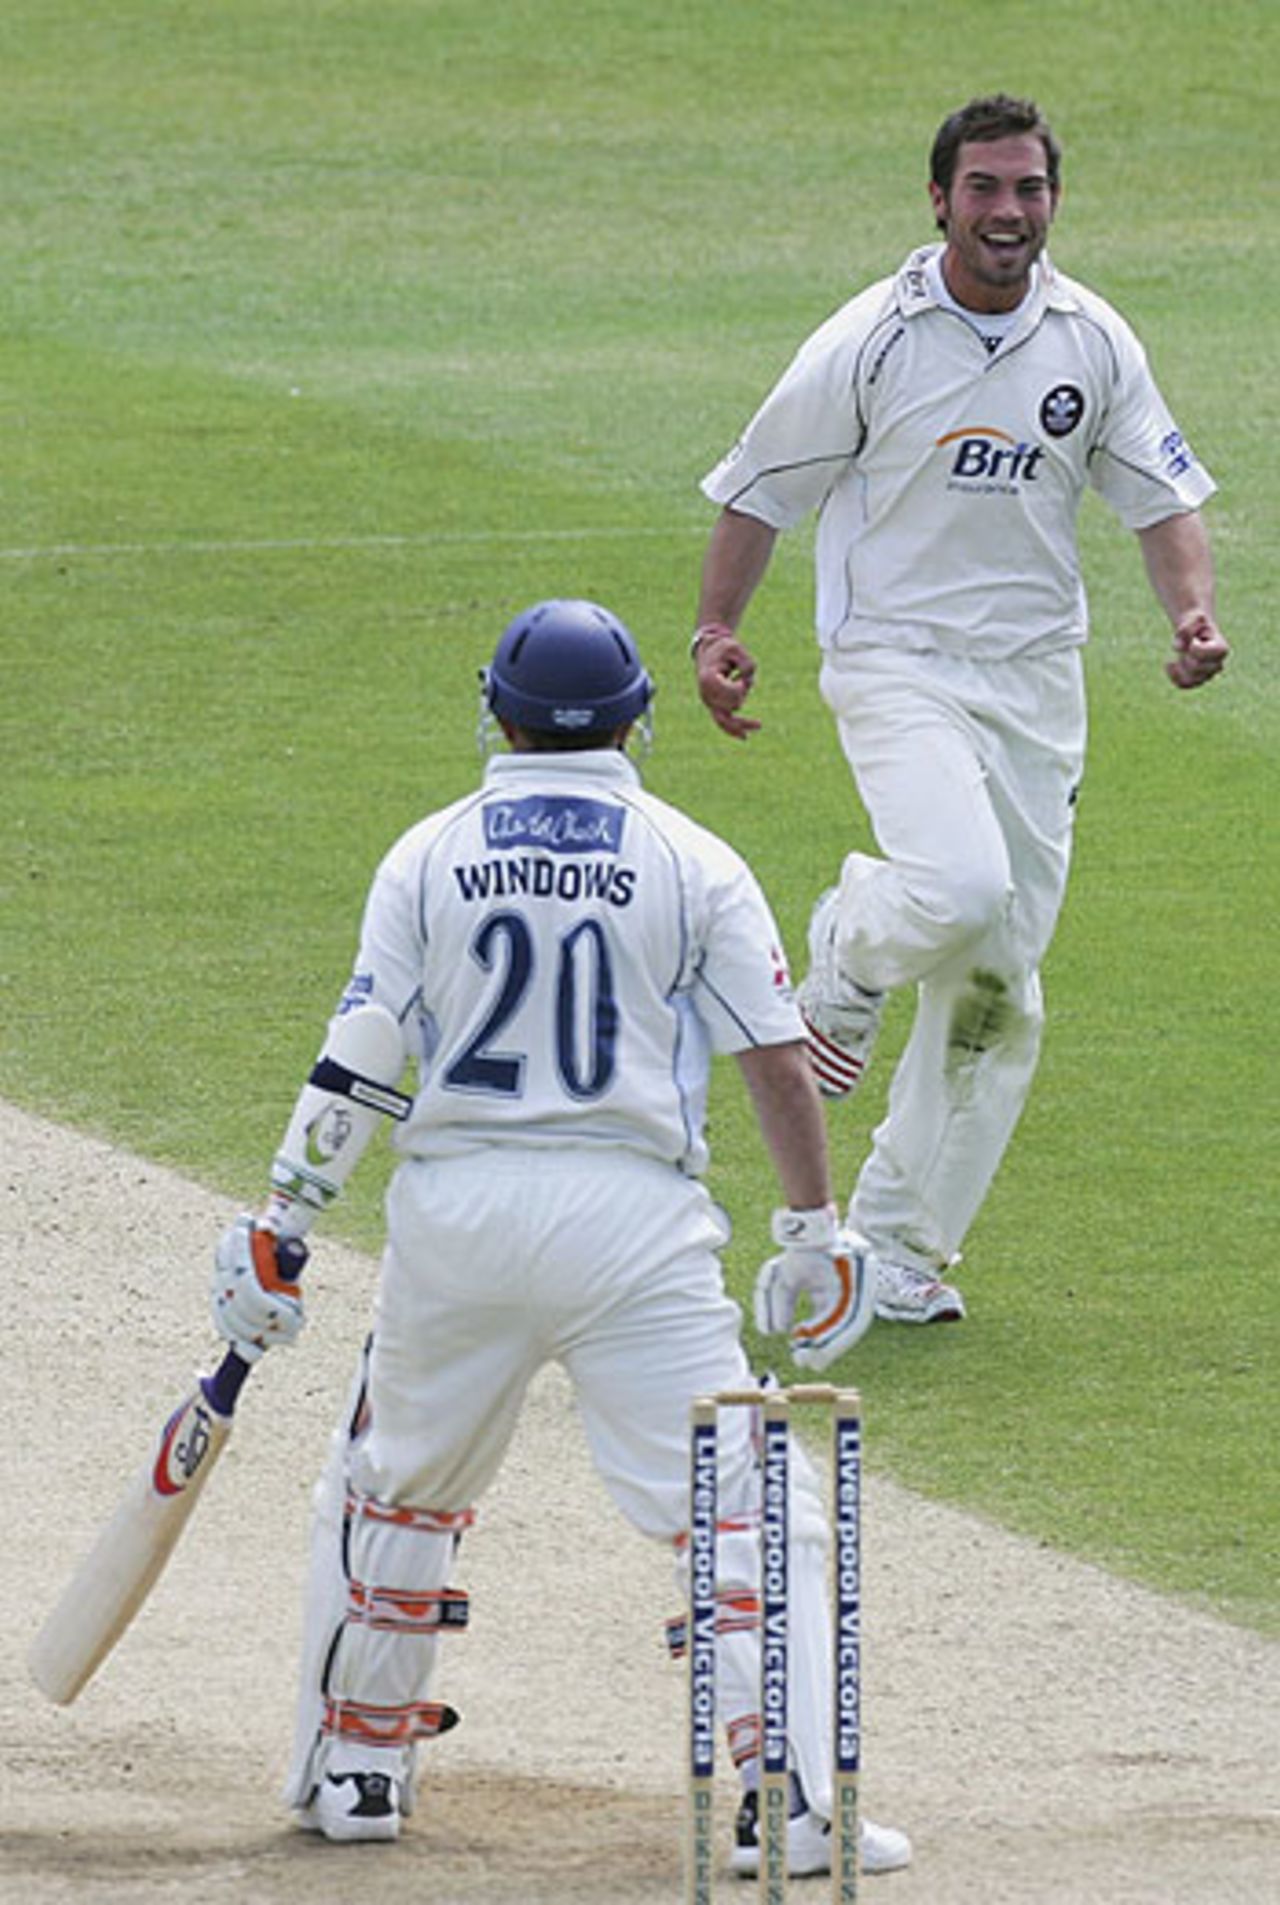 James Benning dismisses Matt Windows,  Surrey v Gloucestershire, The Oval, May 5, 2006